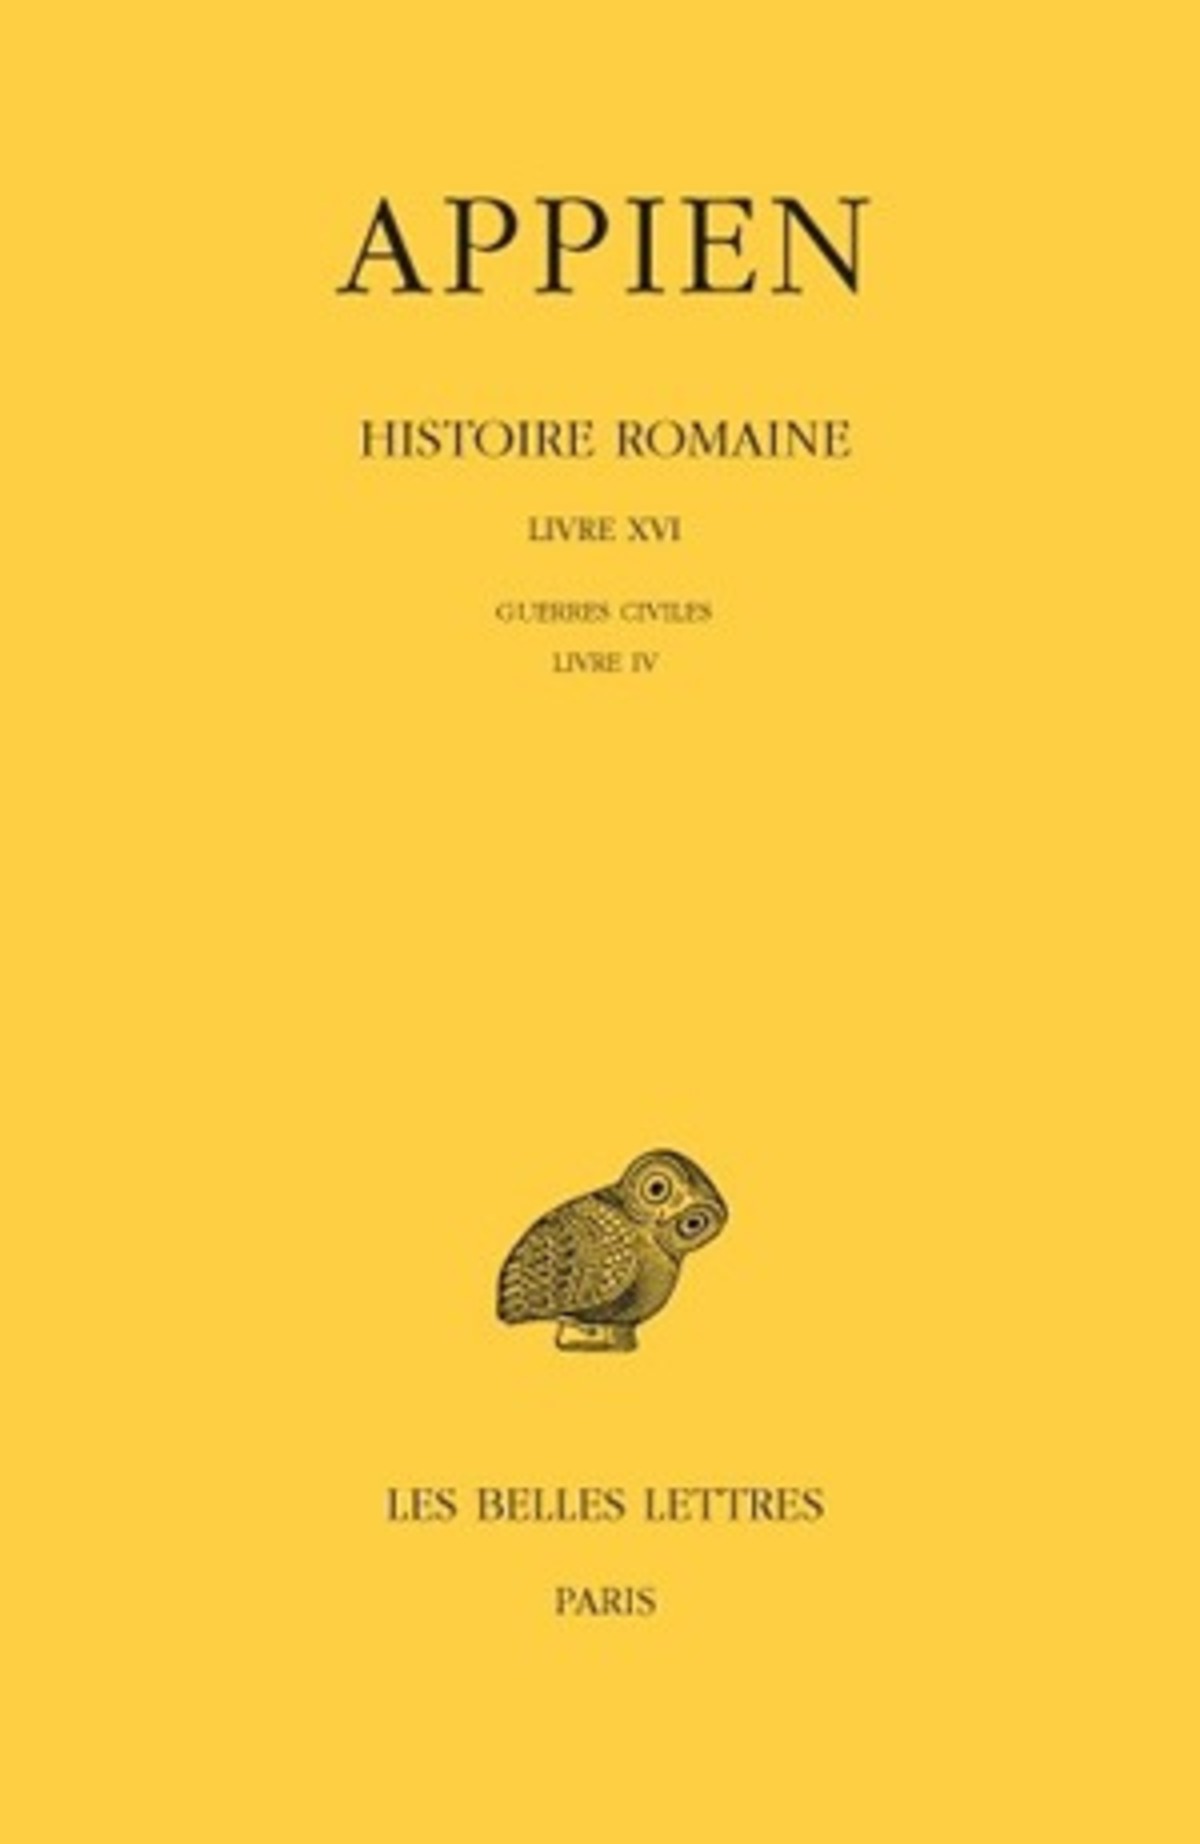 Histoire romaine. Tome XI, Livre XVI: Guerres civiles, Livre IV